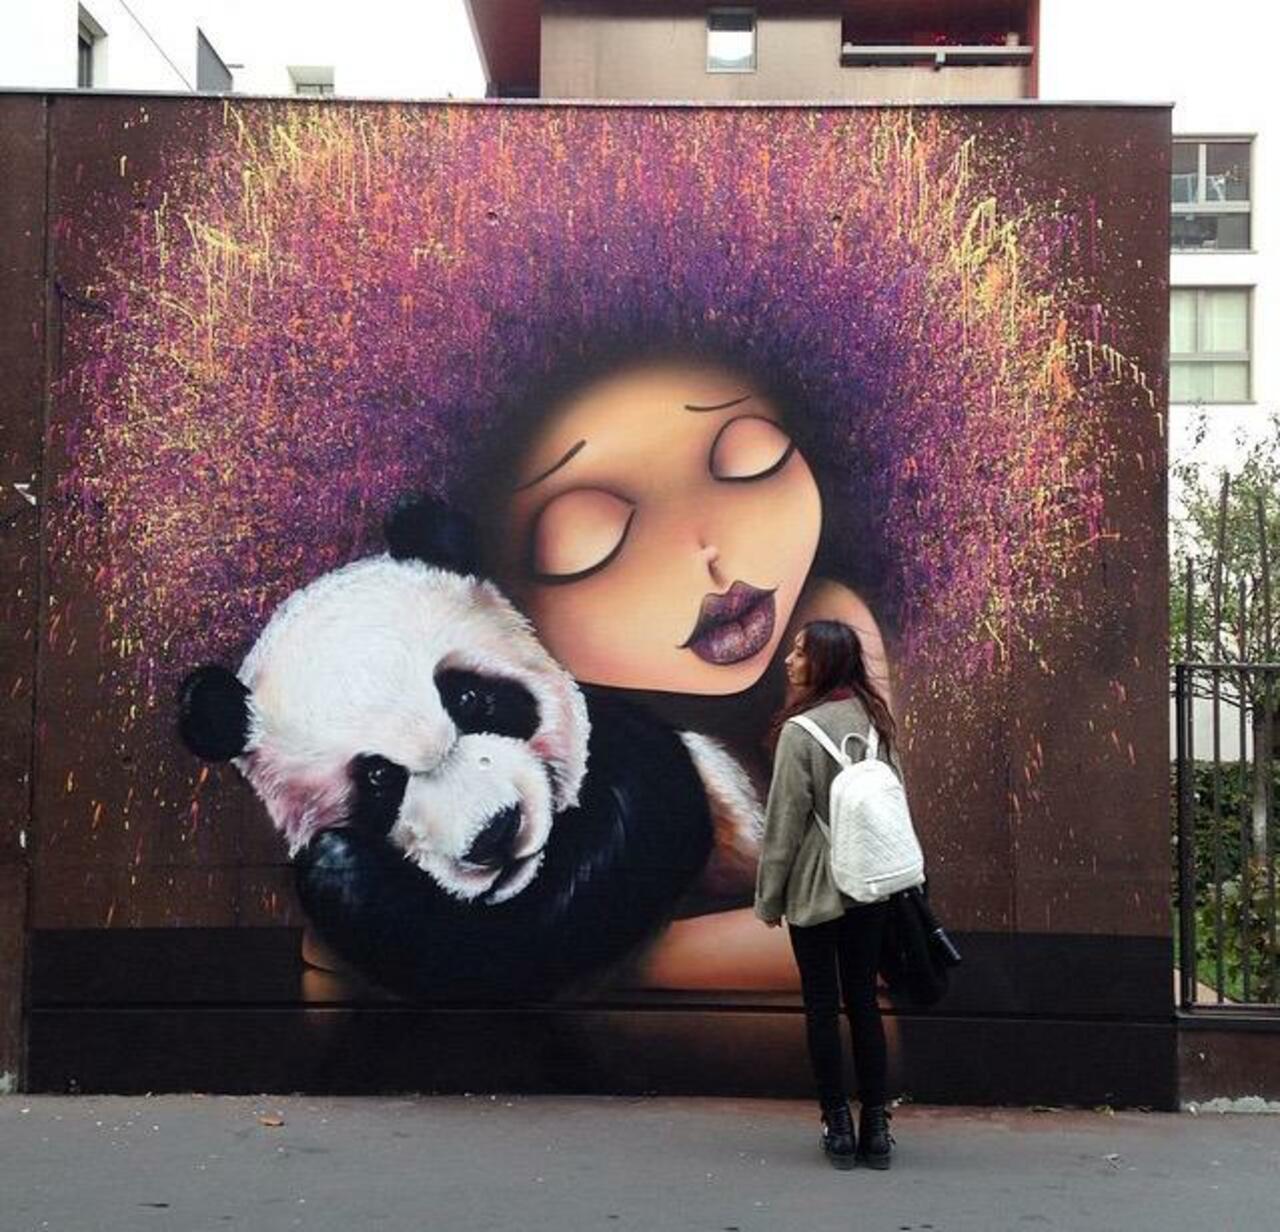 Street Art by VinieGraffiti in Paris 

#art #graffiti #mural #streetart http://t.co/SkOU0mGRZE